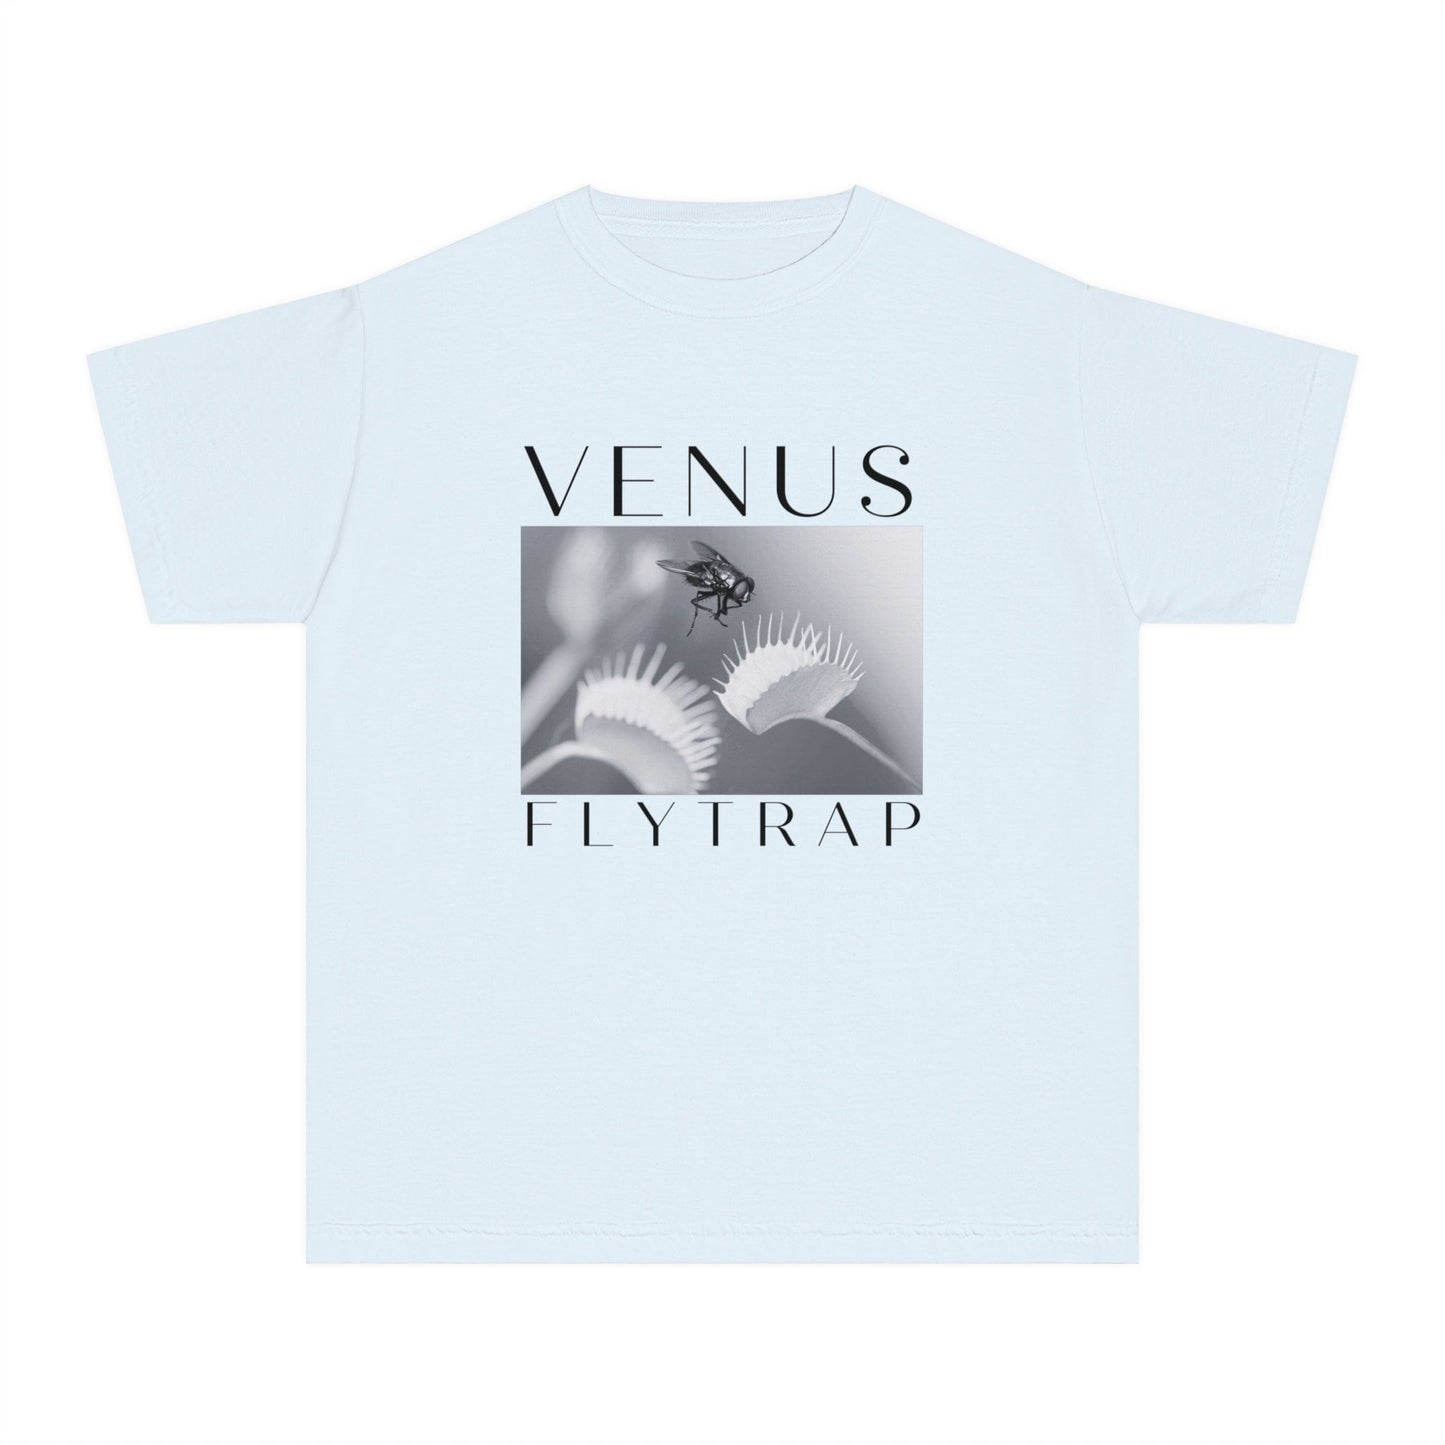 Venus Flytrap Kids Shirt Venus Fly Trap Shirt Carnivorous Plant Lover Shirt Kids, Gender Neutral Kids Clothes, Plant Shirt Kids Band Tee